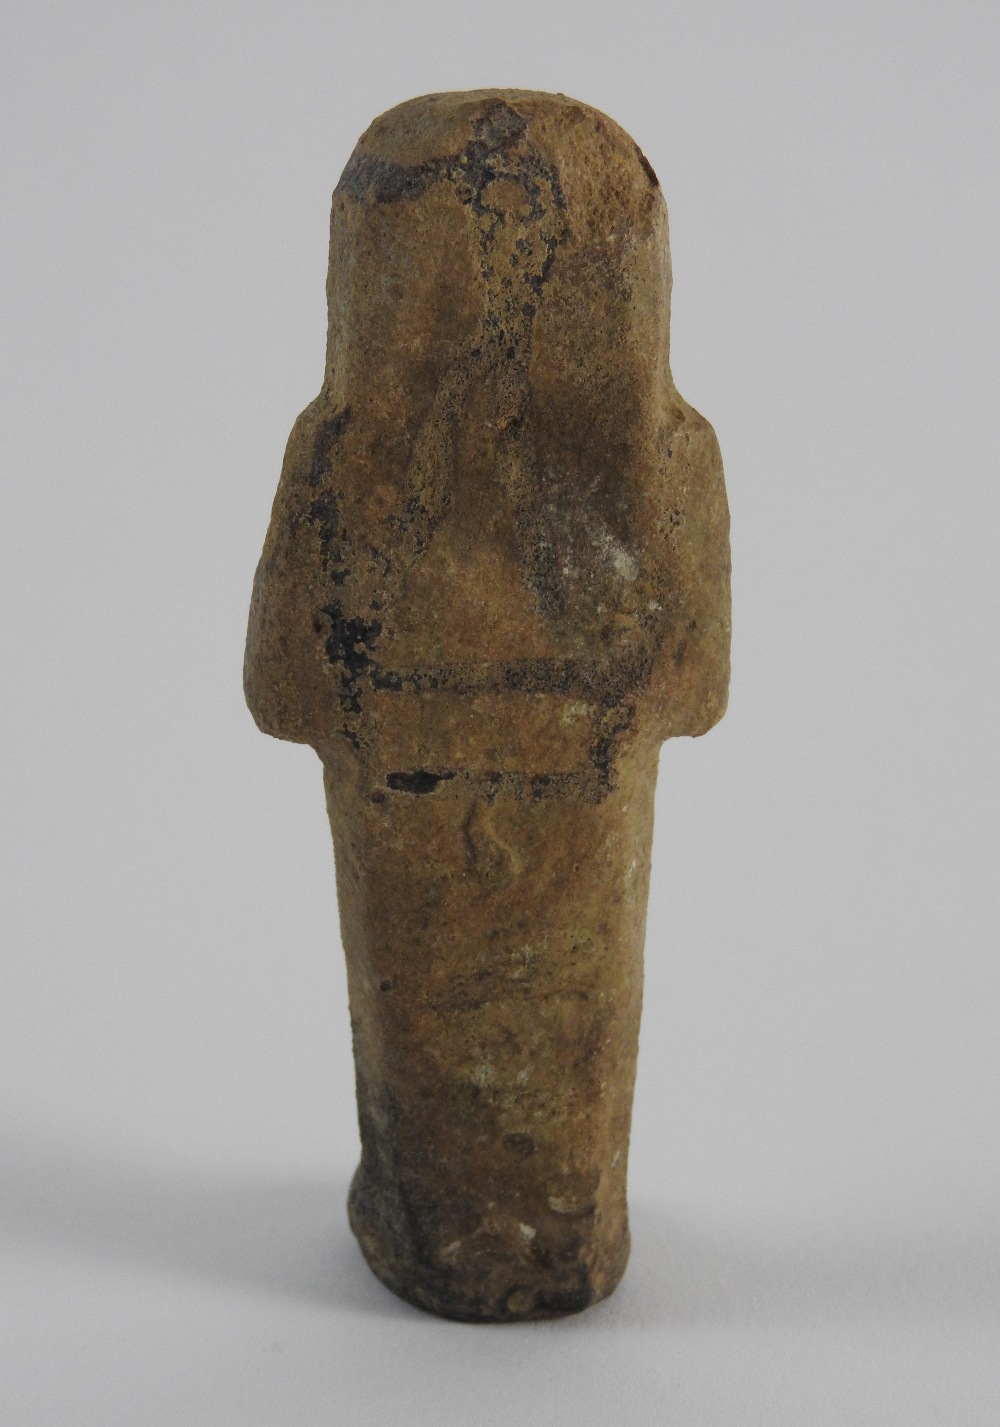 A late period Egyptian shabti figure 9cm high - Image 2 of 2